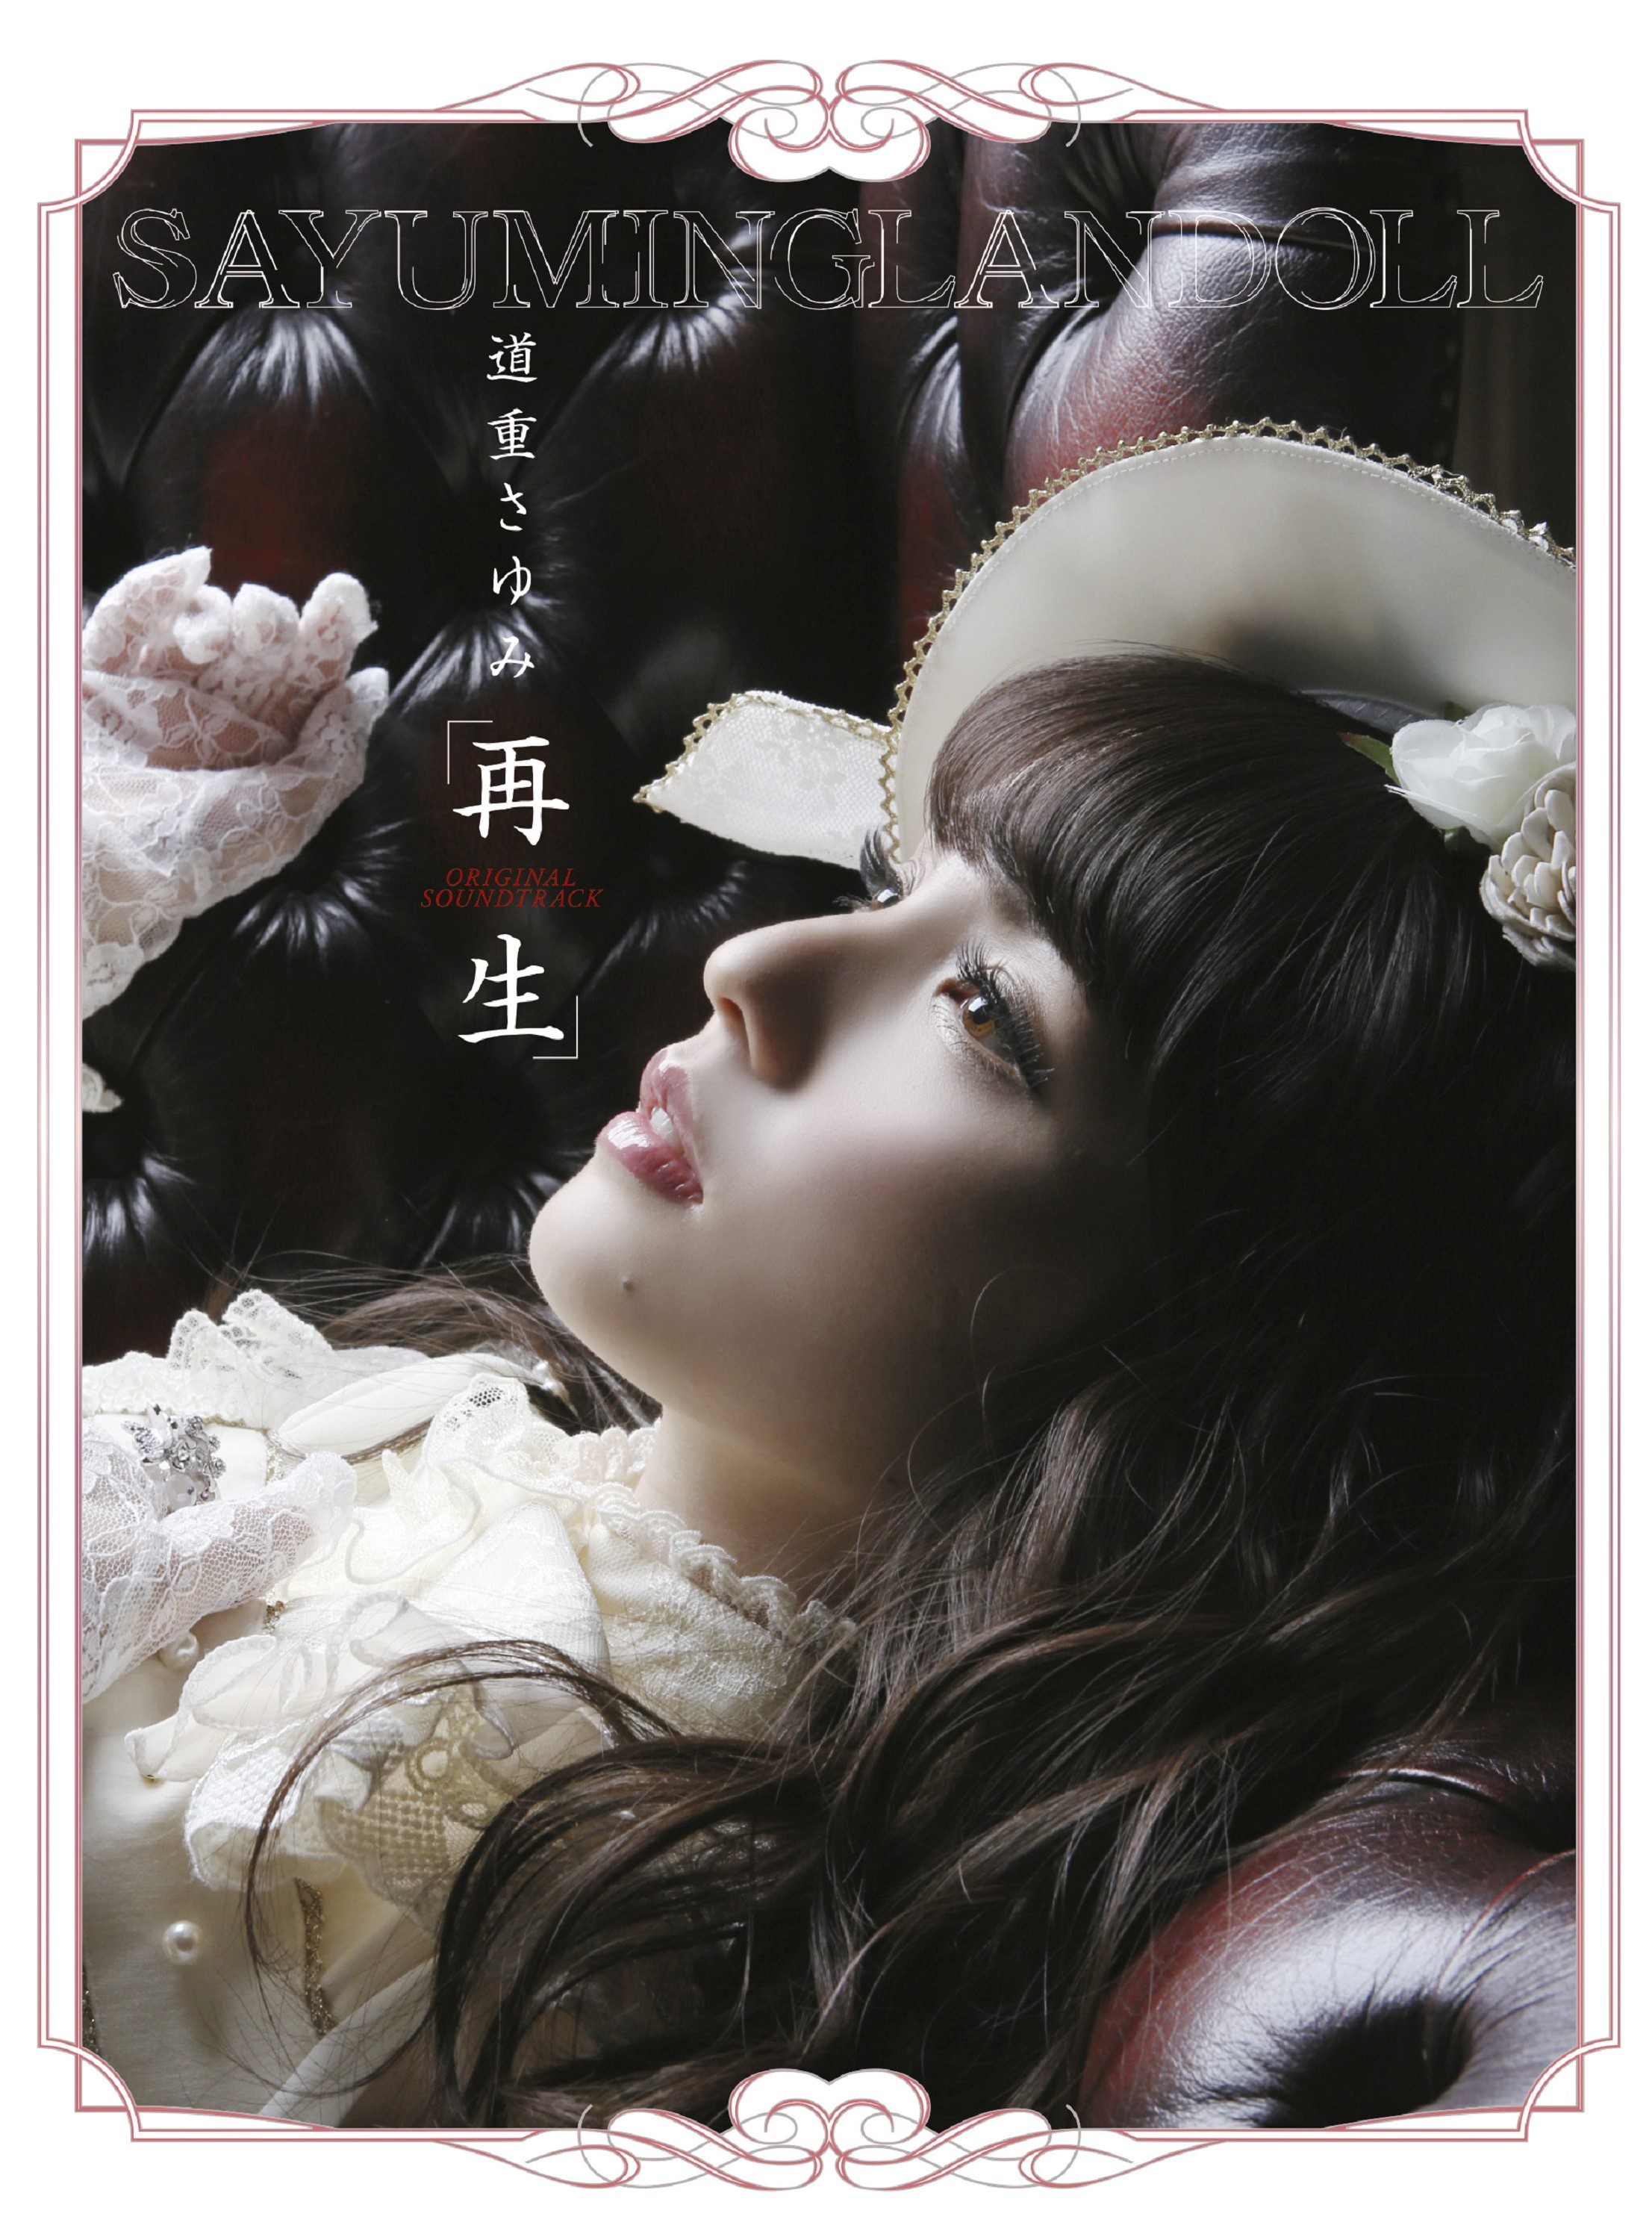 SAYUMINGLANDOLL~再生~ [Blu-ray]　(shin